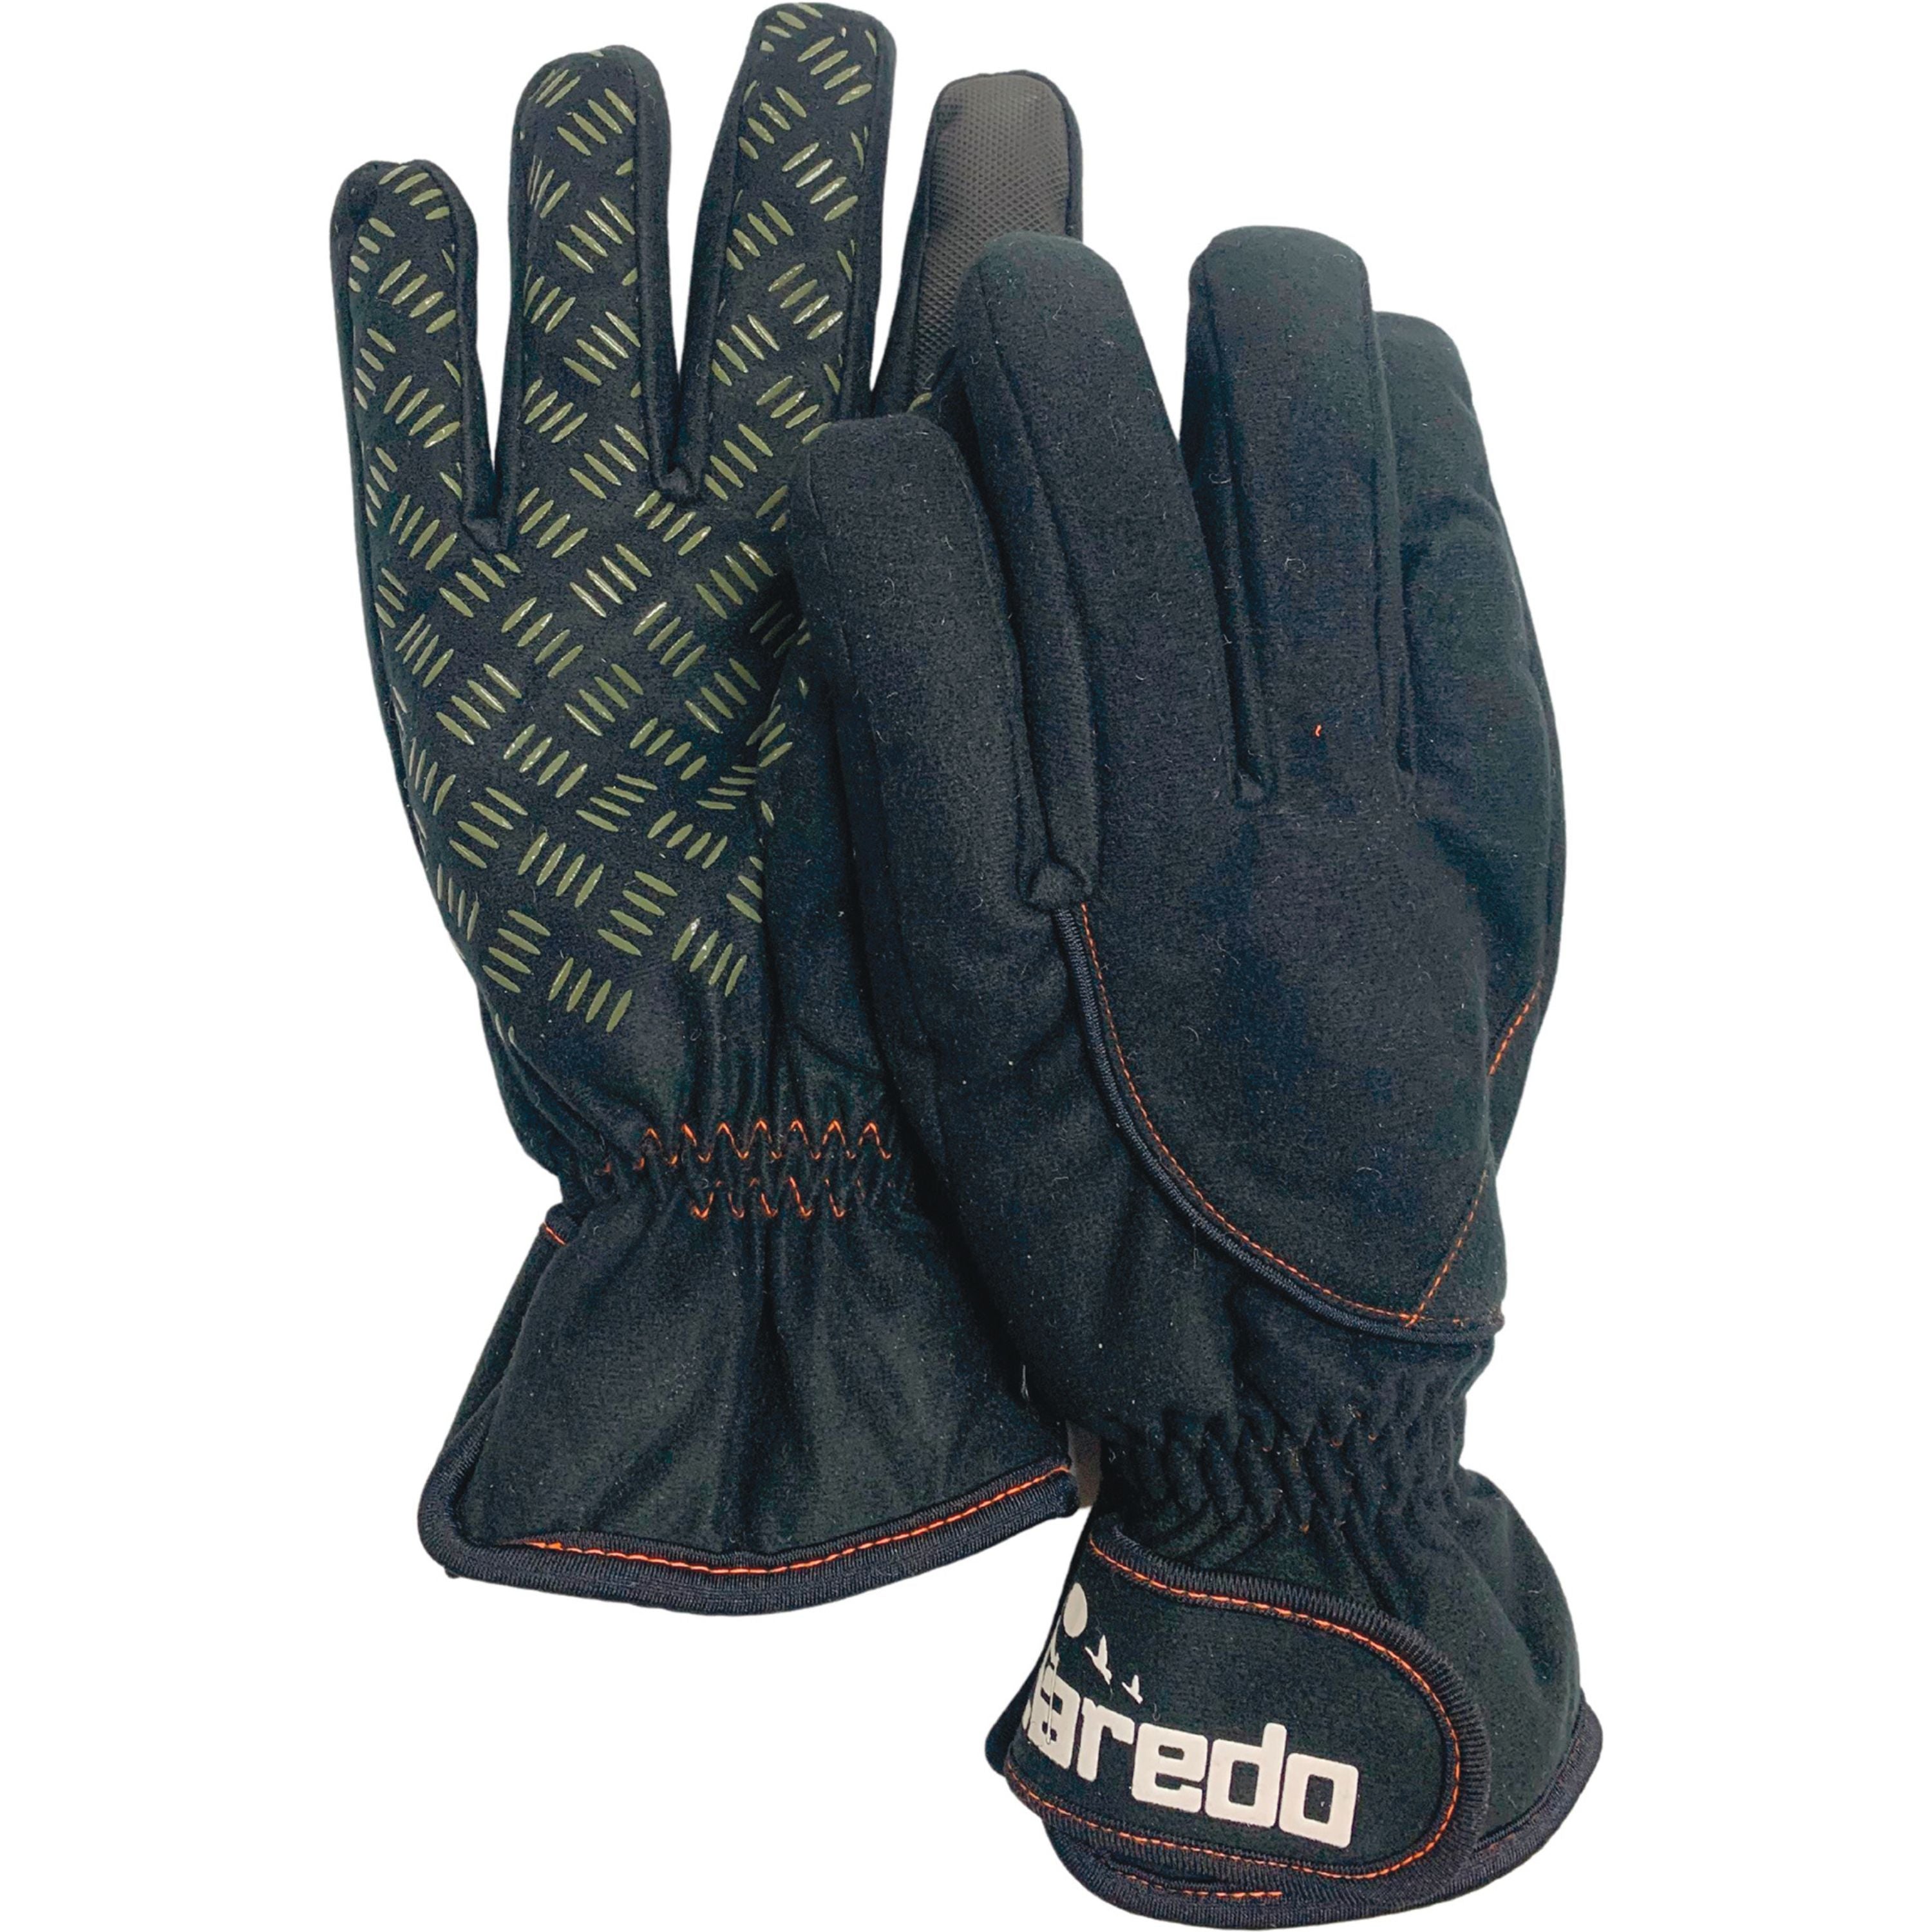 Waterproof gloves - Men's